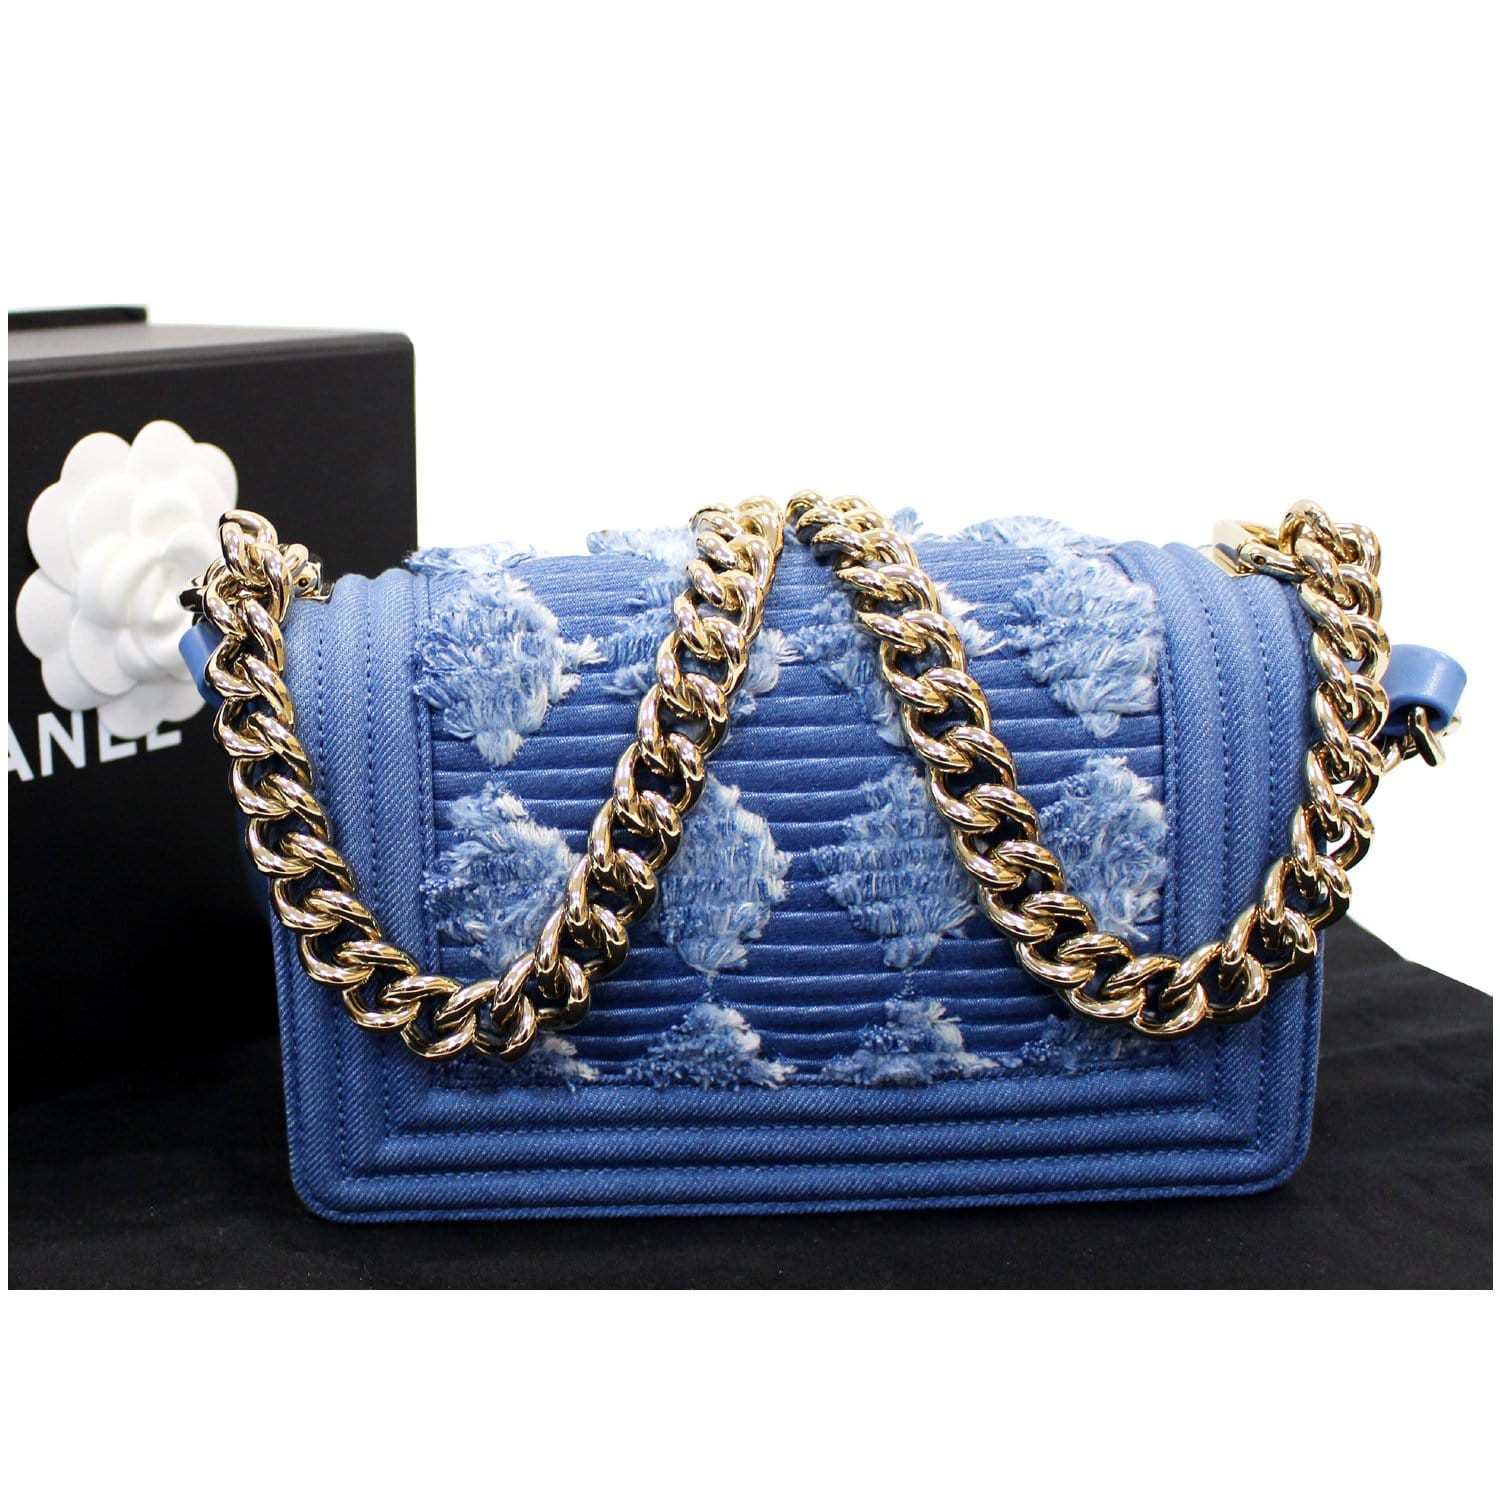 CHANEL - Boy bag large blue with handle – DressMore